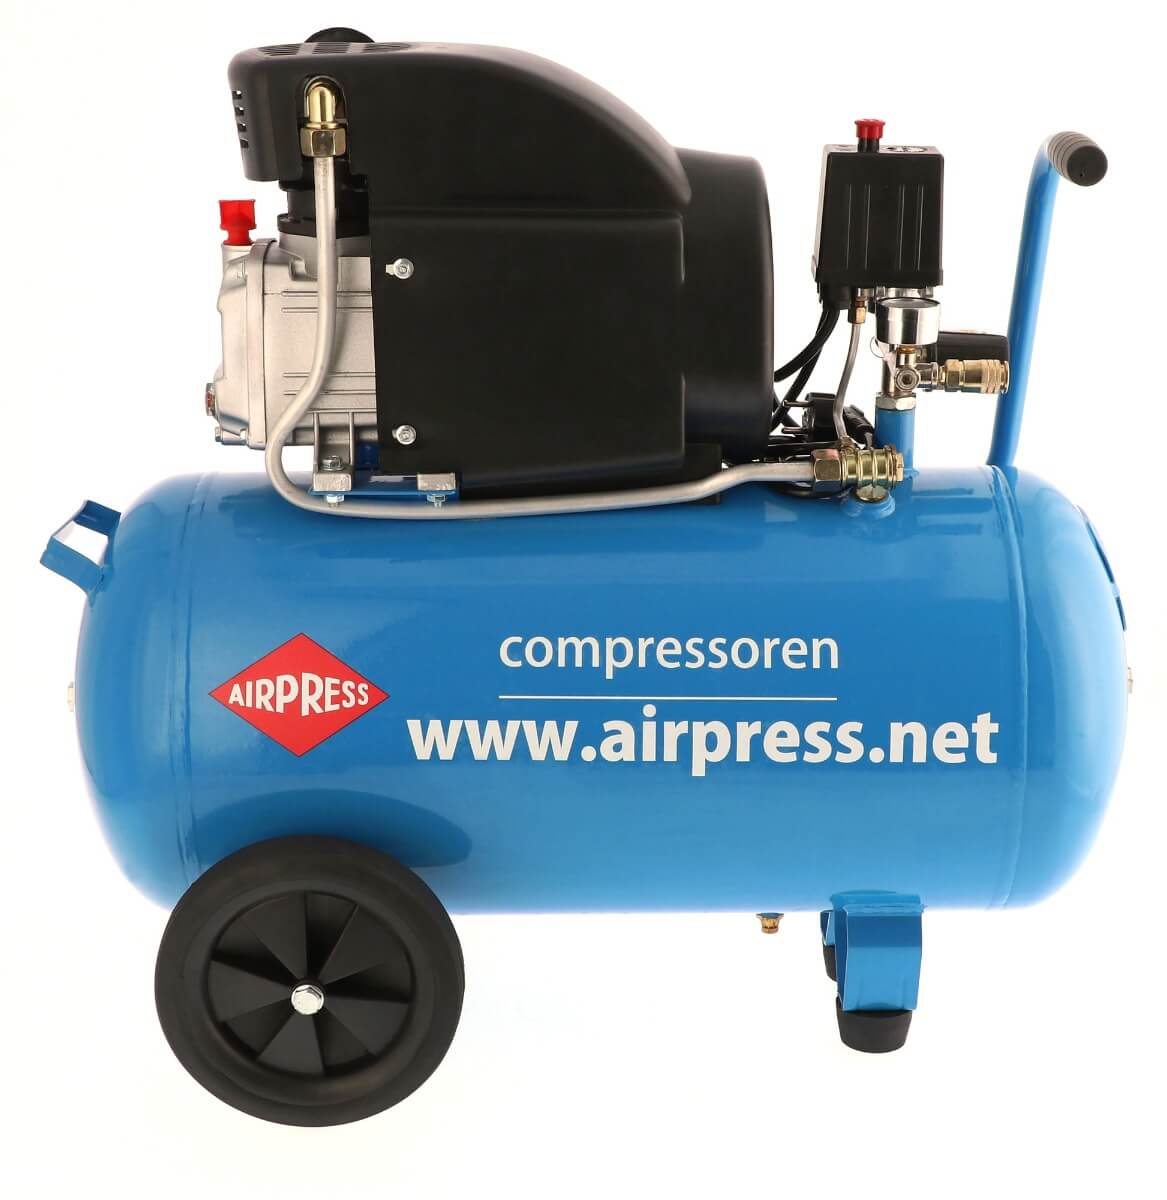 Hl 325-25 compressor